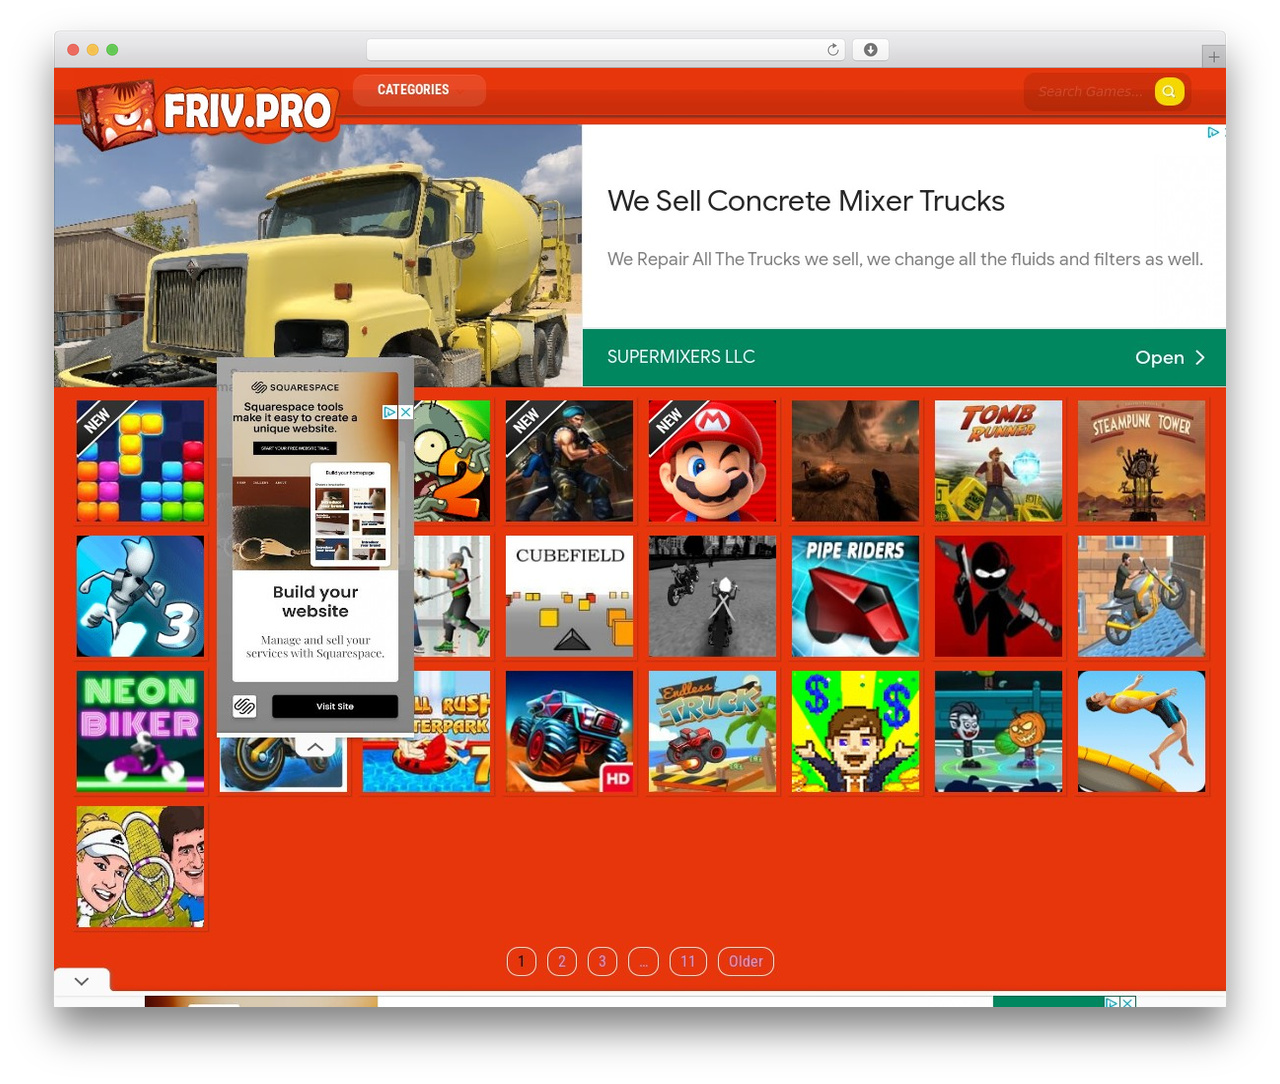 Friv2 Games, Play the best Friv2 games - Jogos Friv - Jeux …